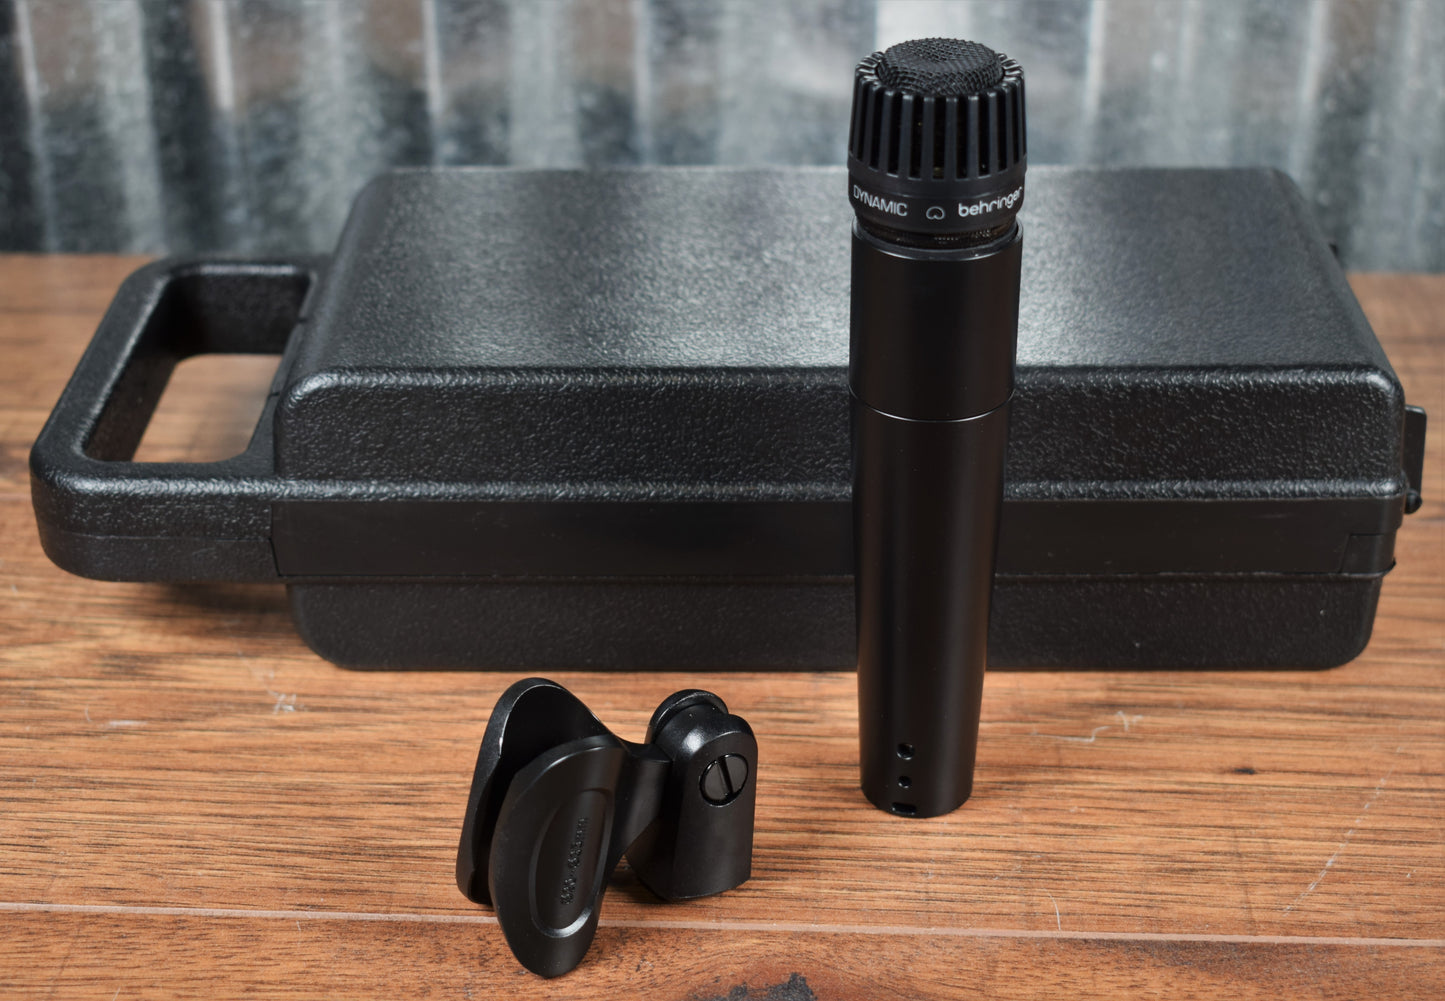 Behringer SL75C Dynamic Cardioid Handheld Vocal Instrument Microphone 3 Pack